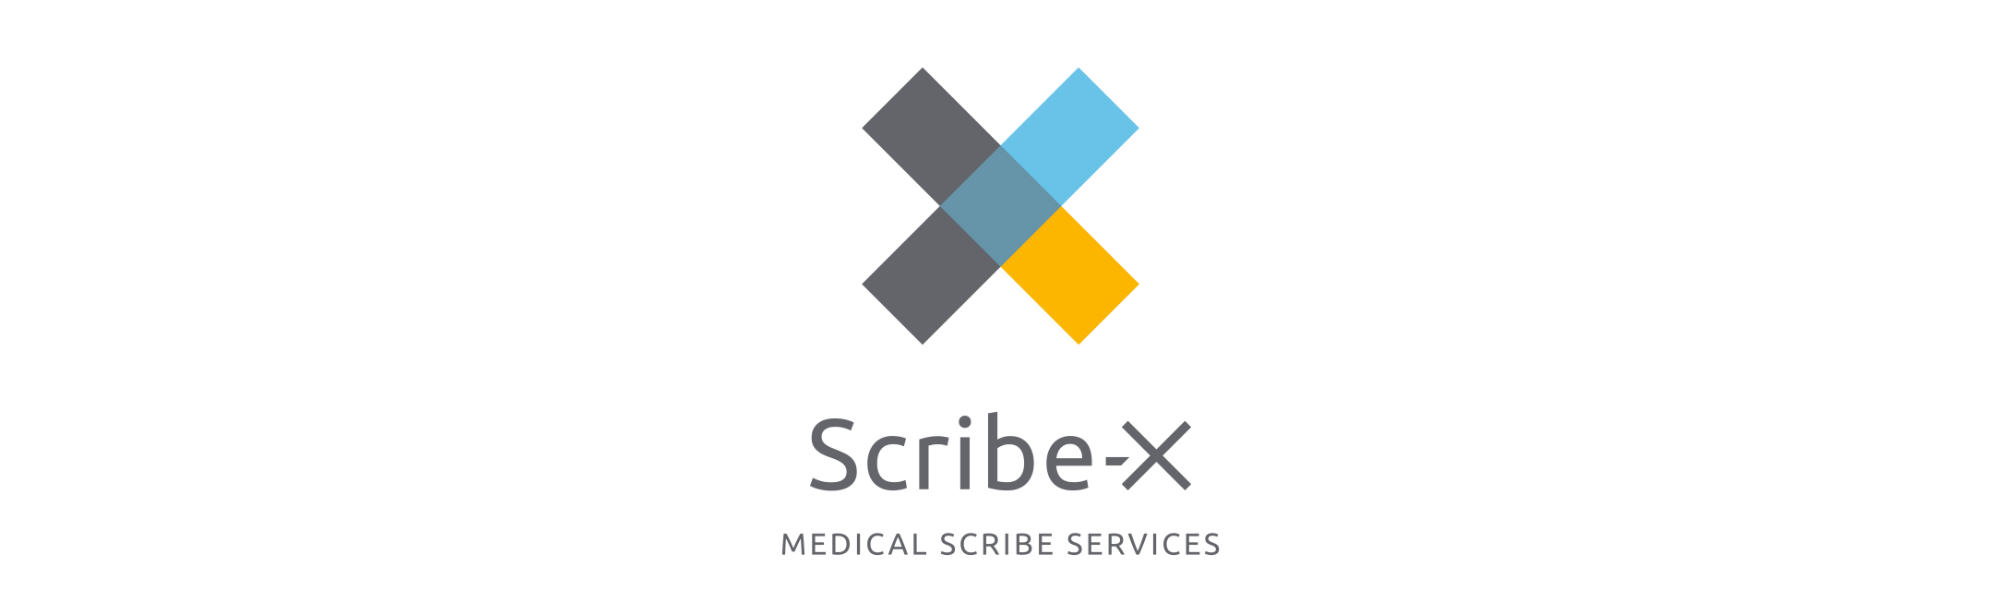 Scribe-X Website Logo